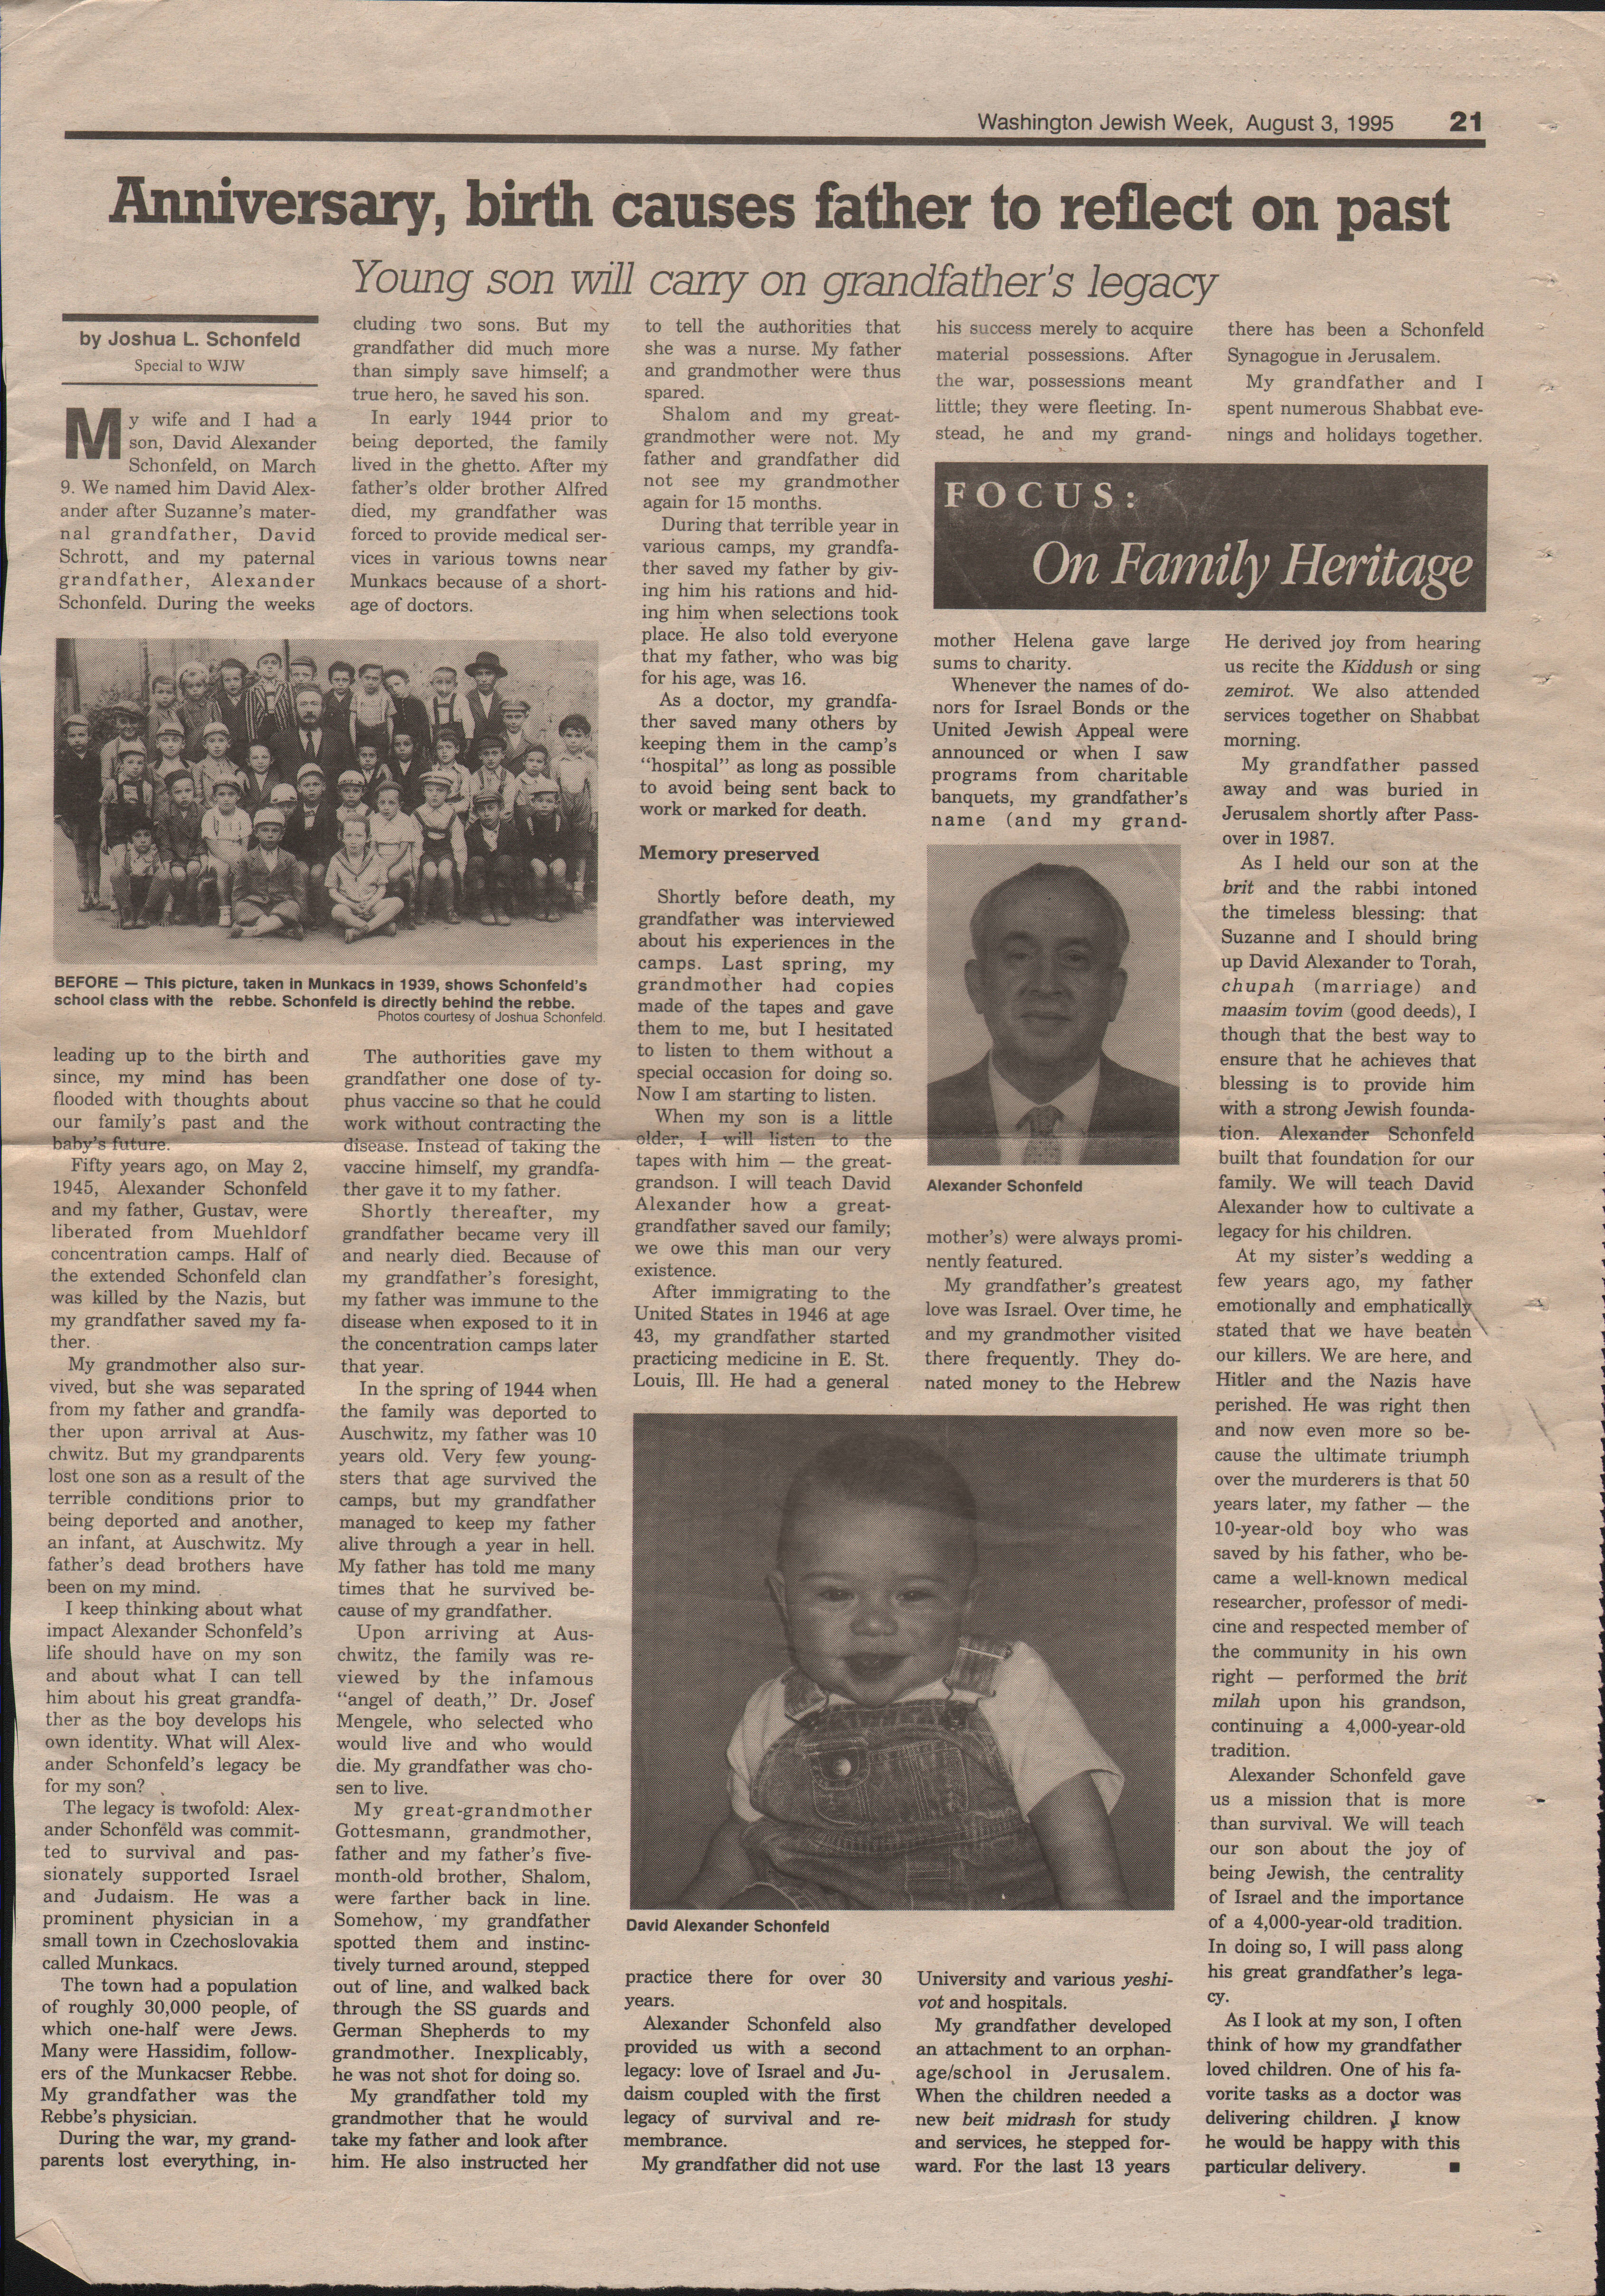 Washington Journal article 1995